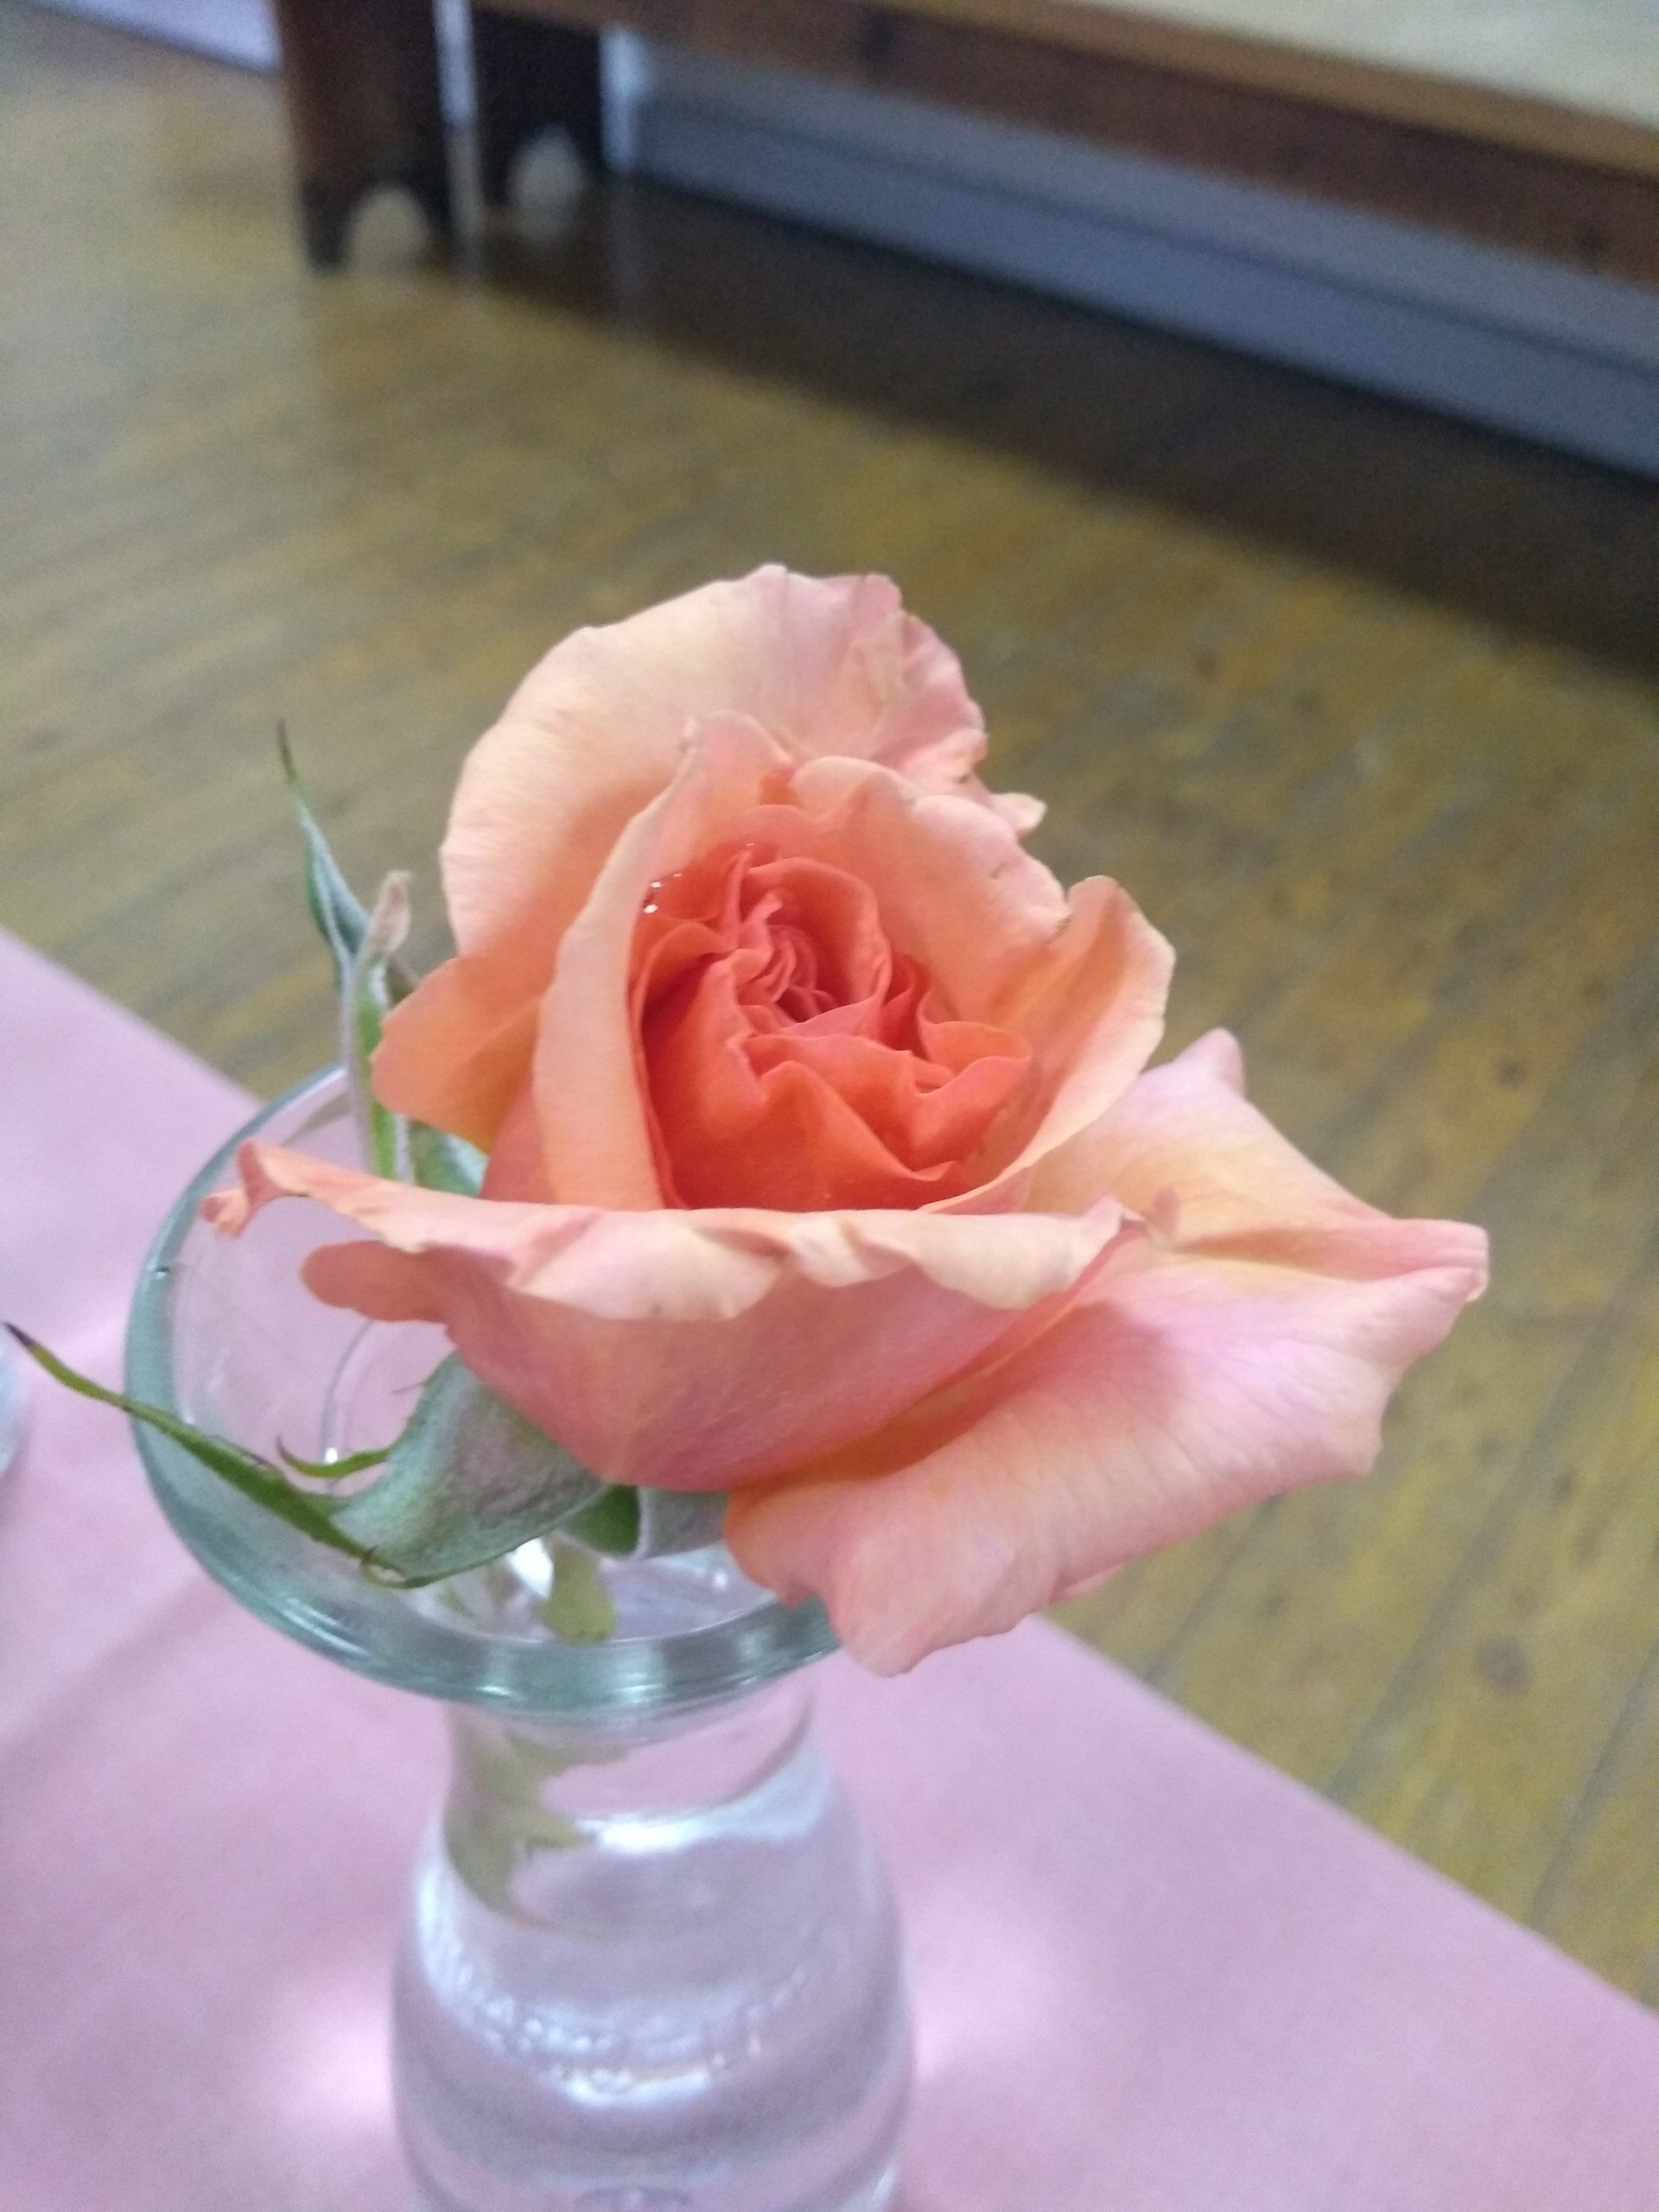 Rose 10 classic form orangey pink